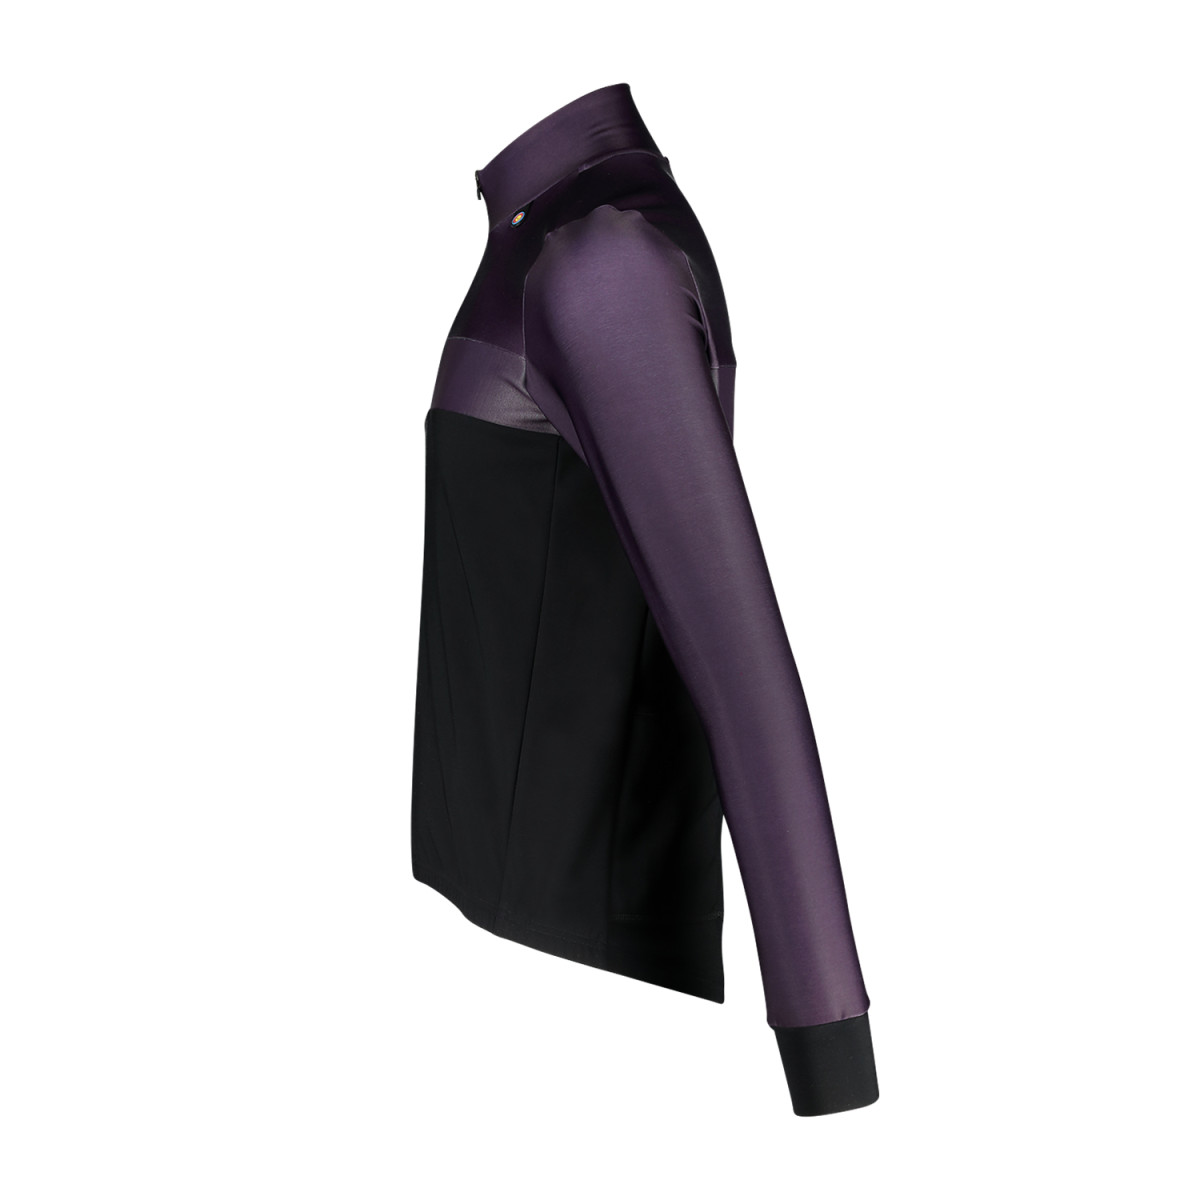 Bioracer Spitfire Tempest Pixel vyriški marškinėliai / Purple Black